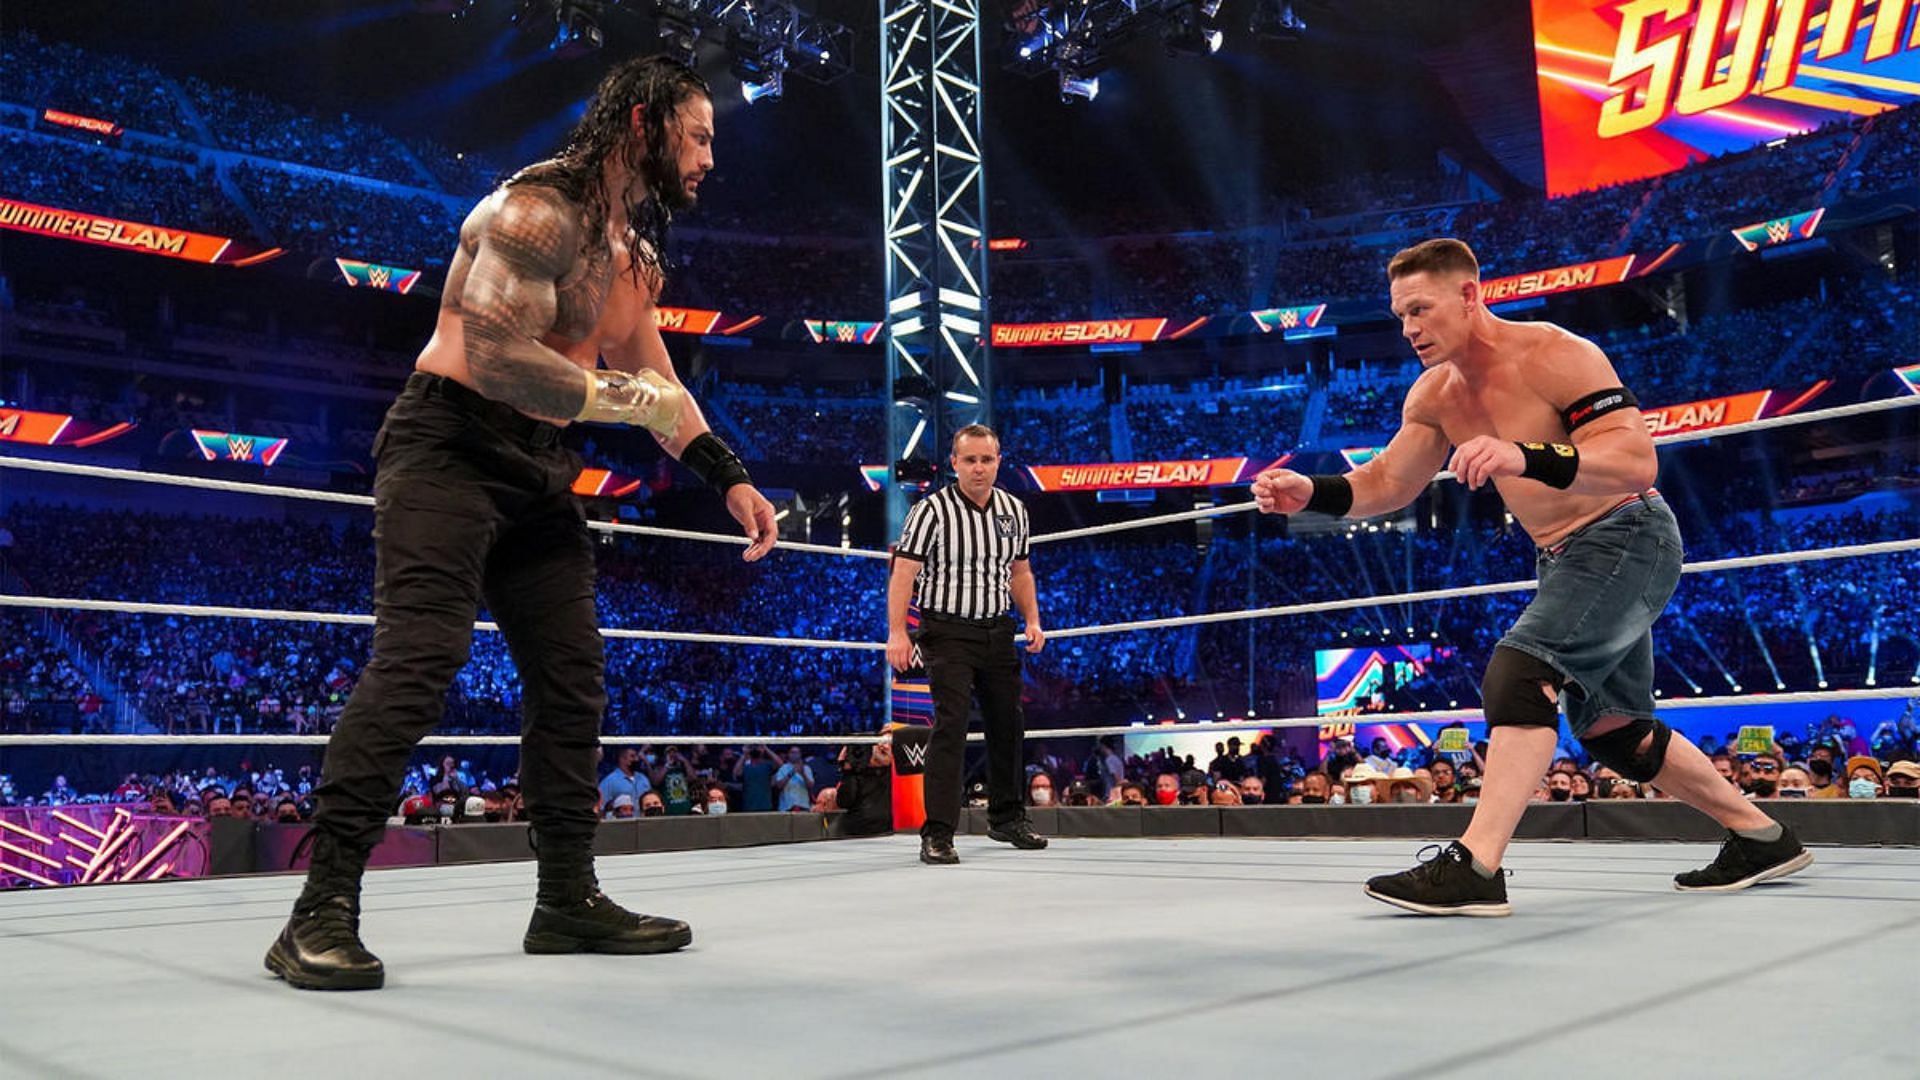 Roman Reigns vs John Cena at SummerSlam 2021. Image Credits: wwe.com